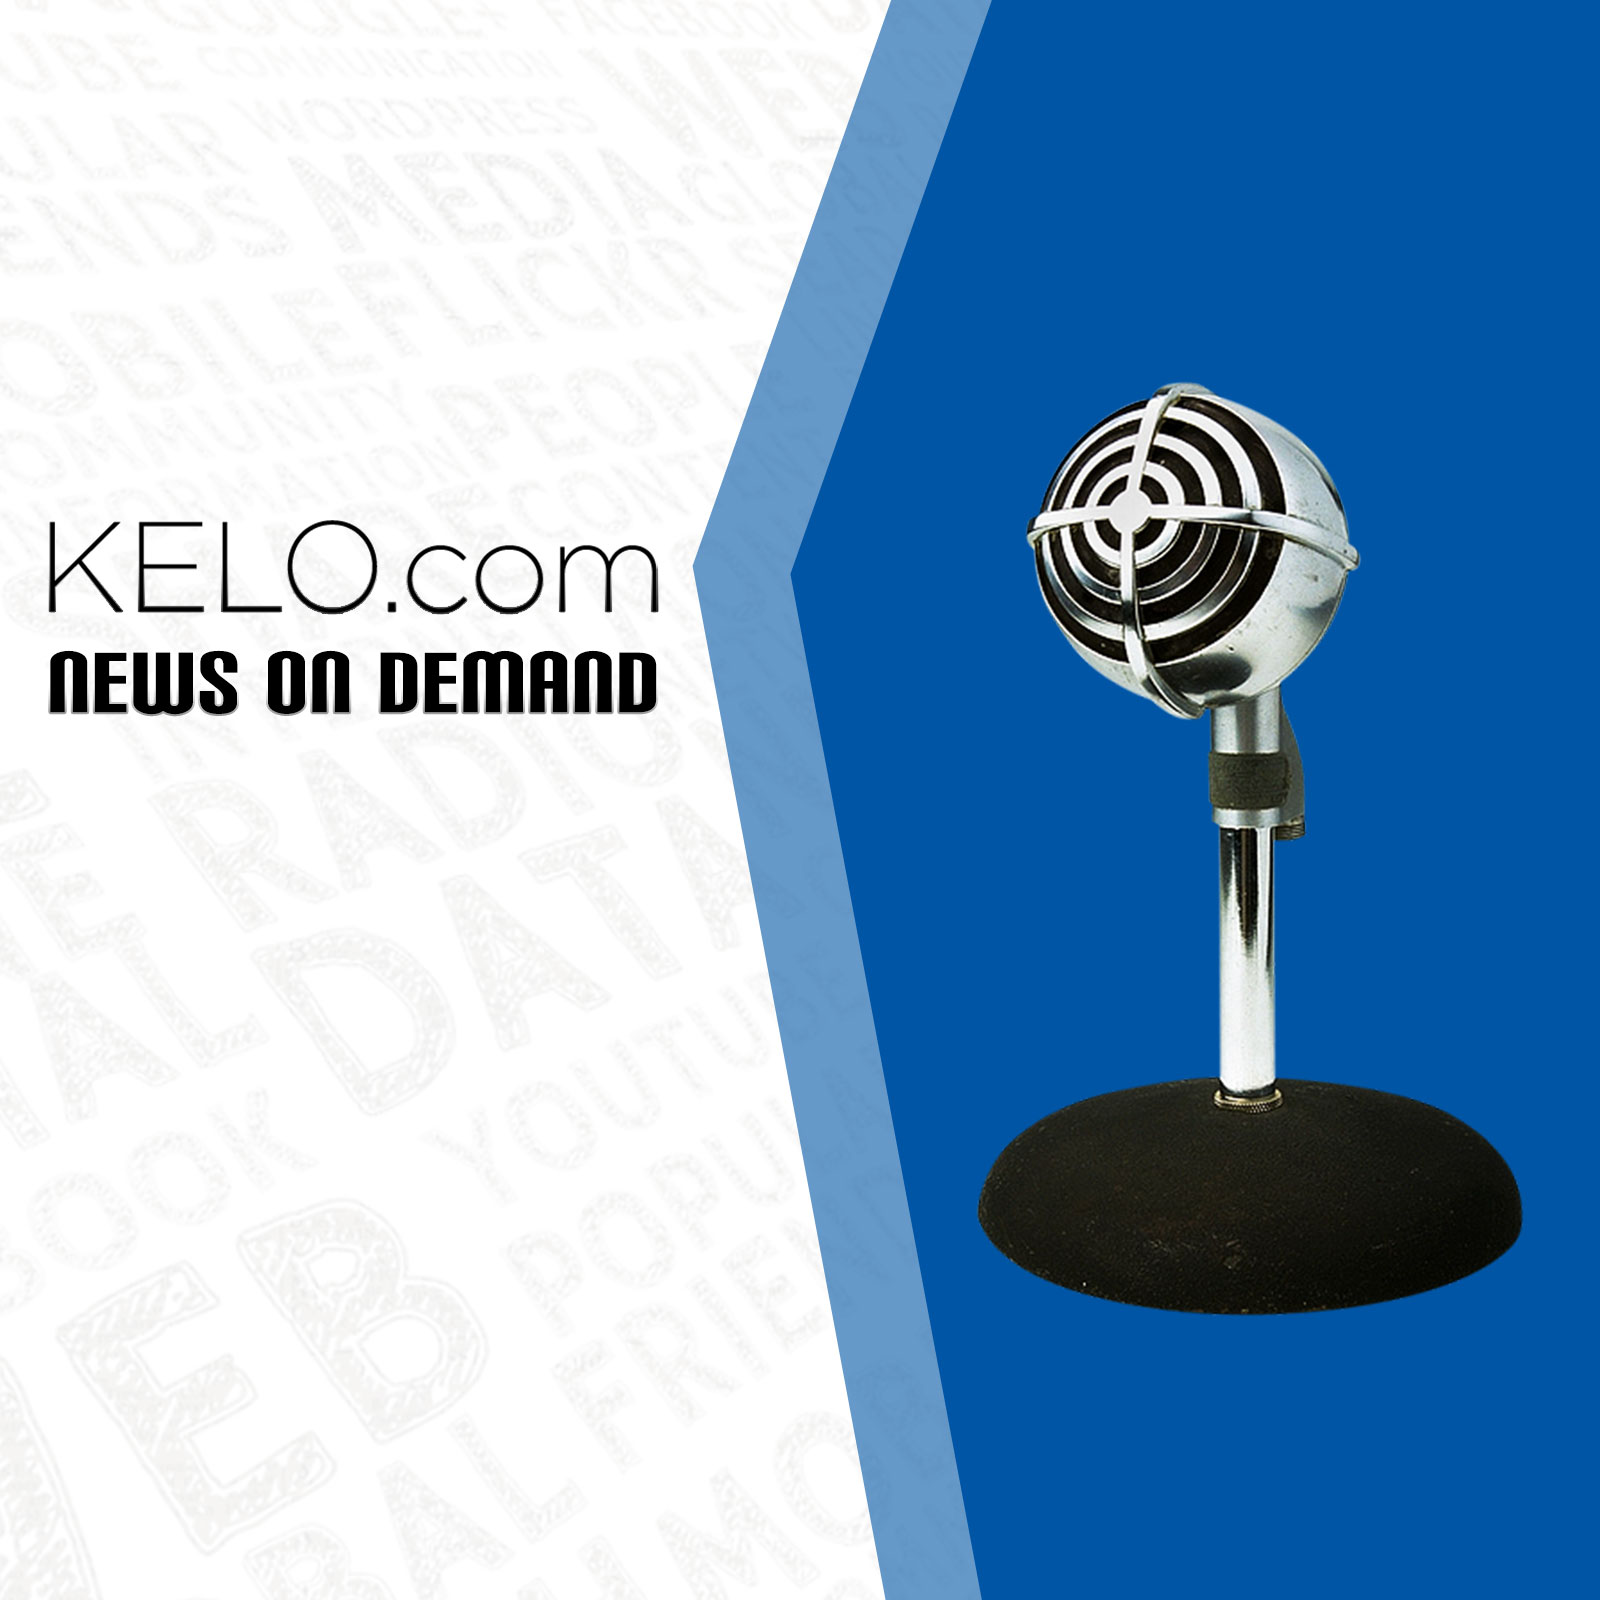 KELO.com News on Demand